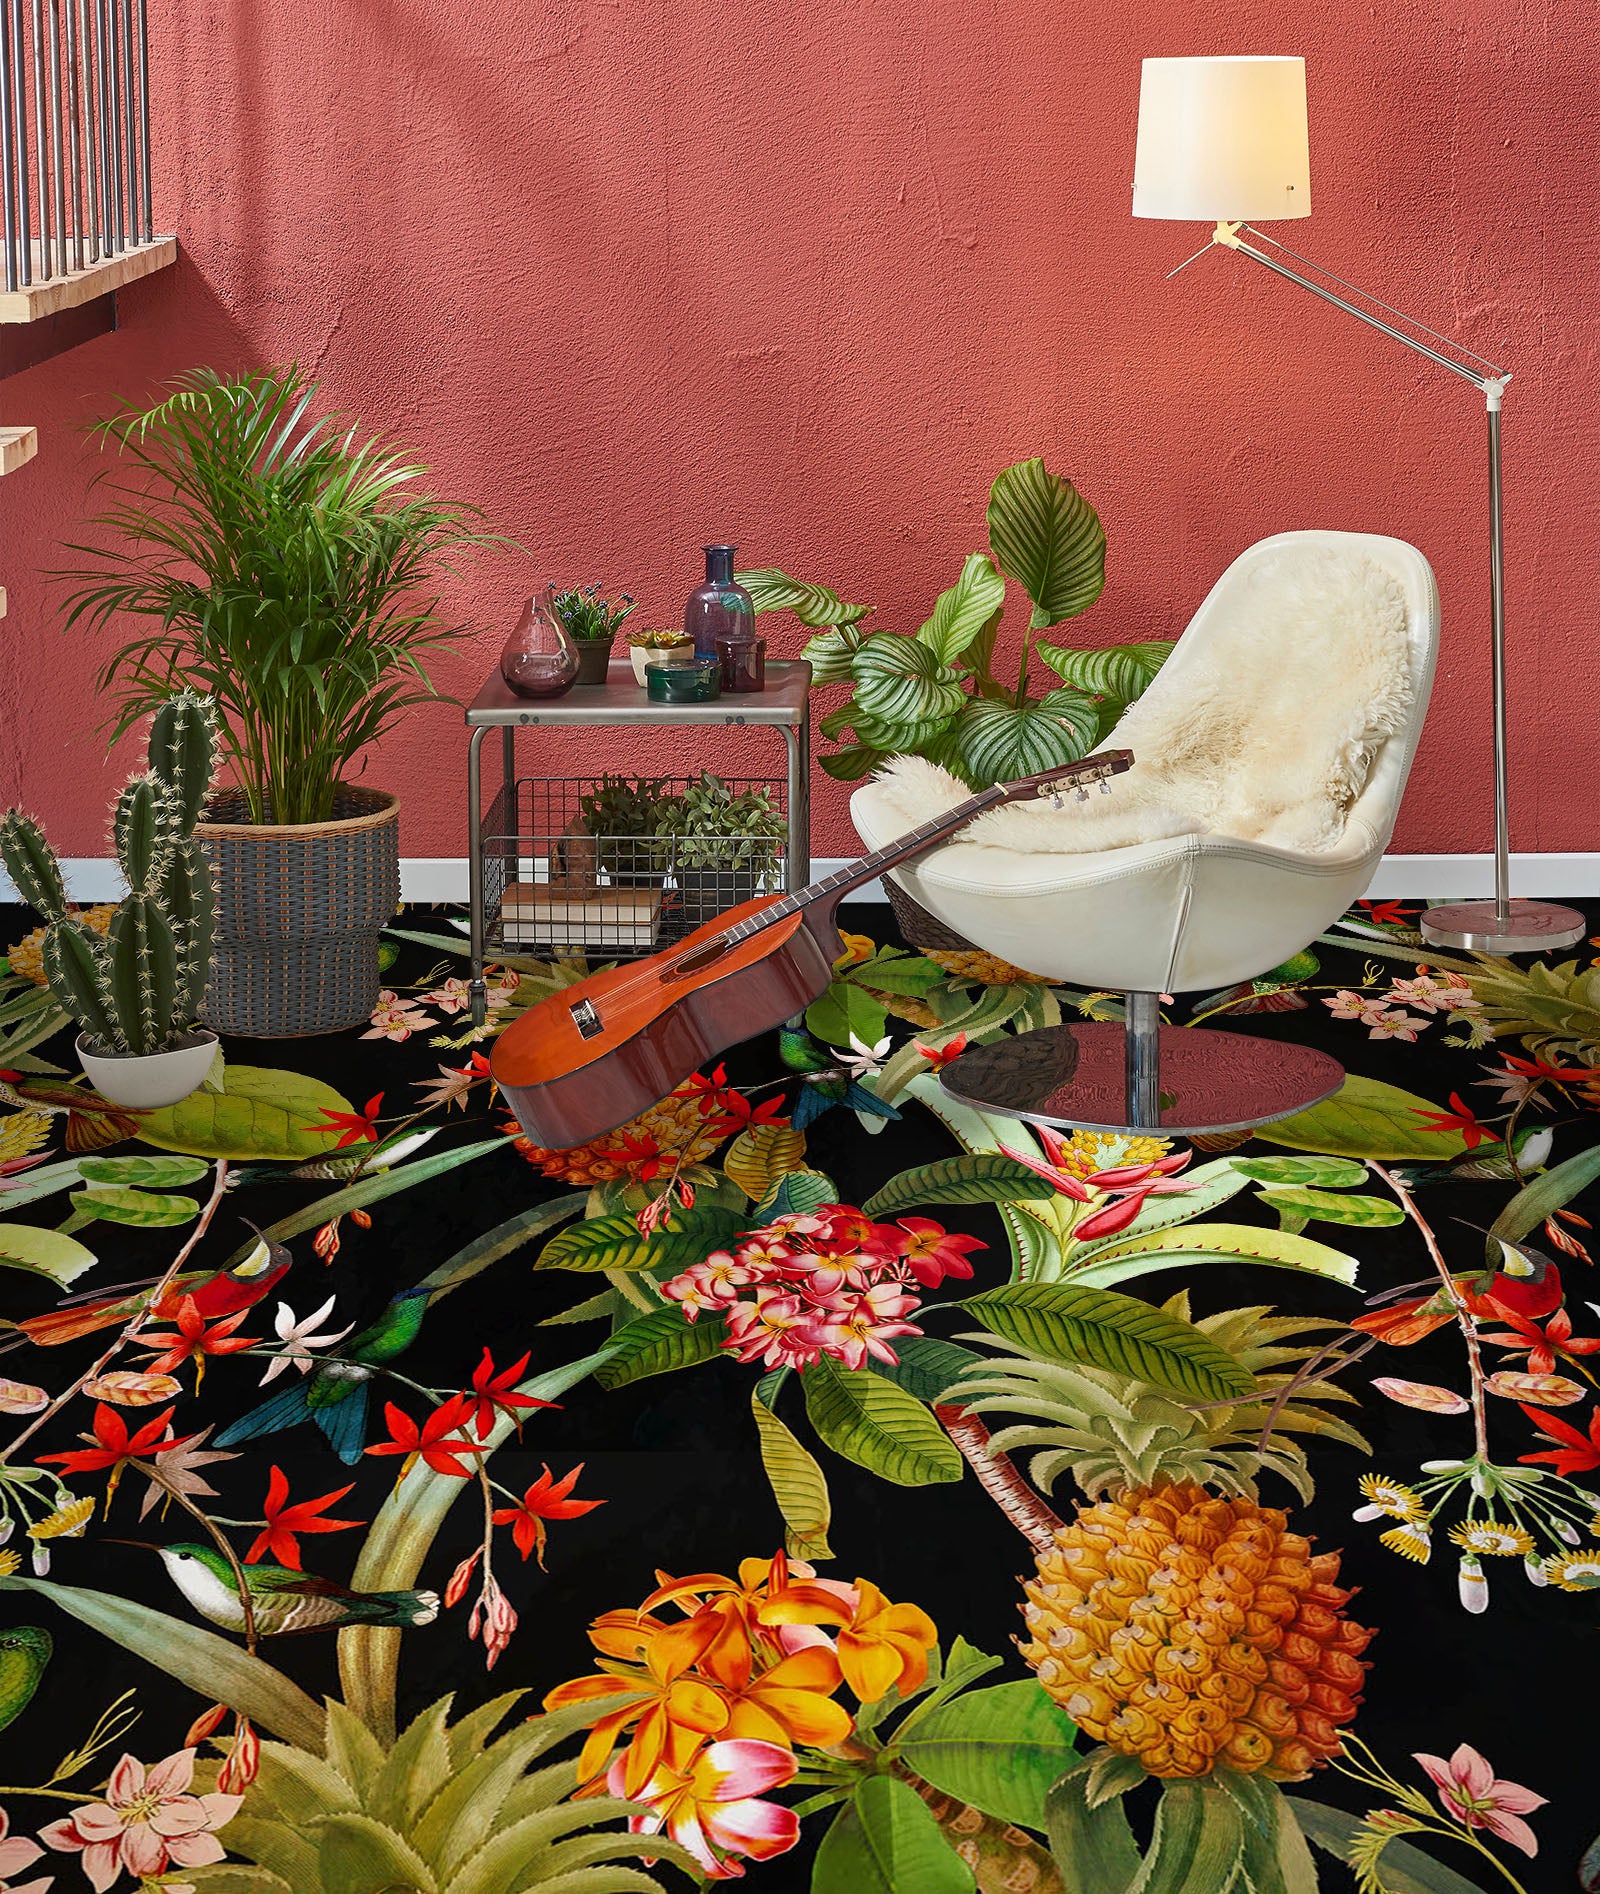 3D Pineapple Flower Leaves 10006 Uta Naumann Floor Mural  Wallpaper Murals Self-Adhesive Removable Print Epoxy